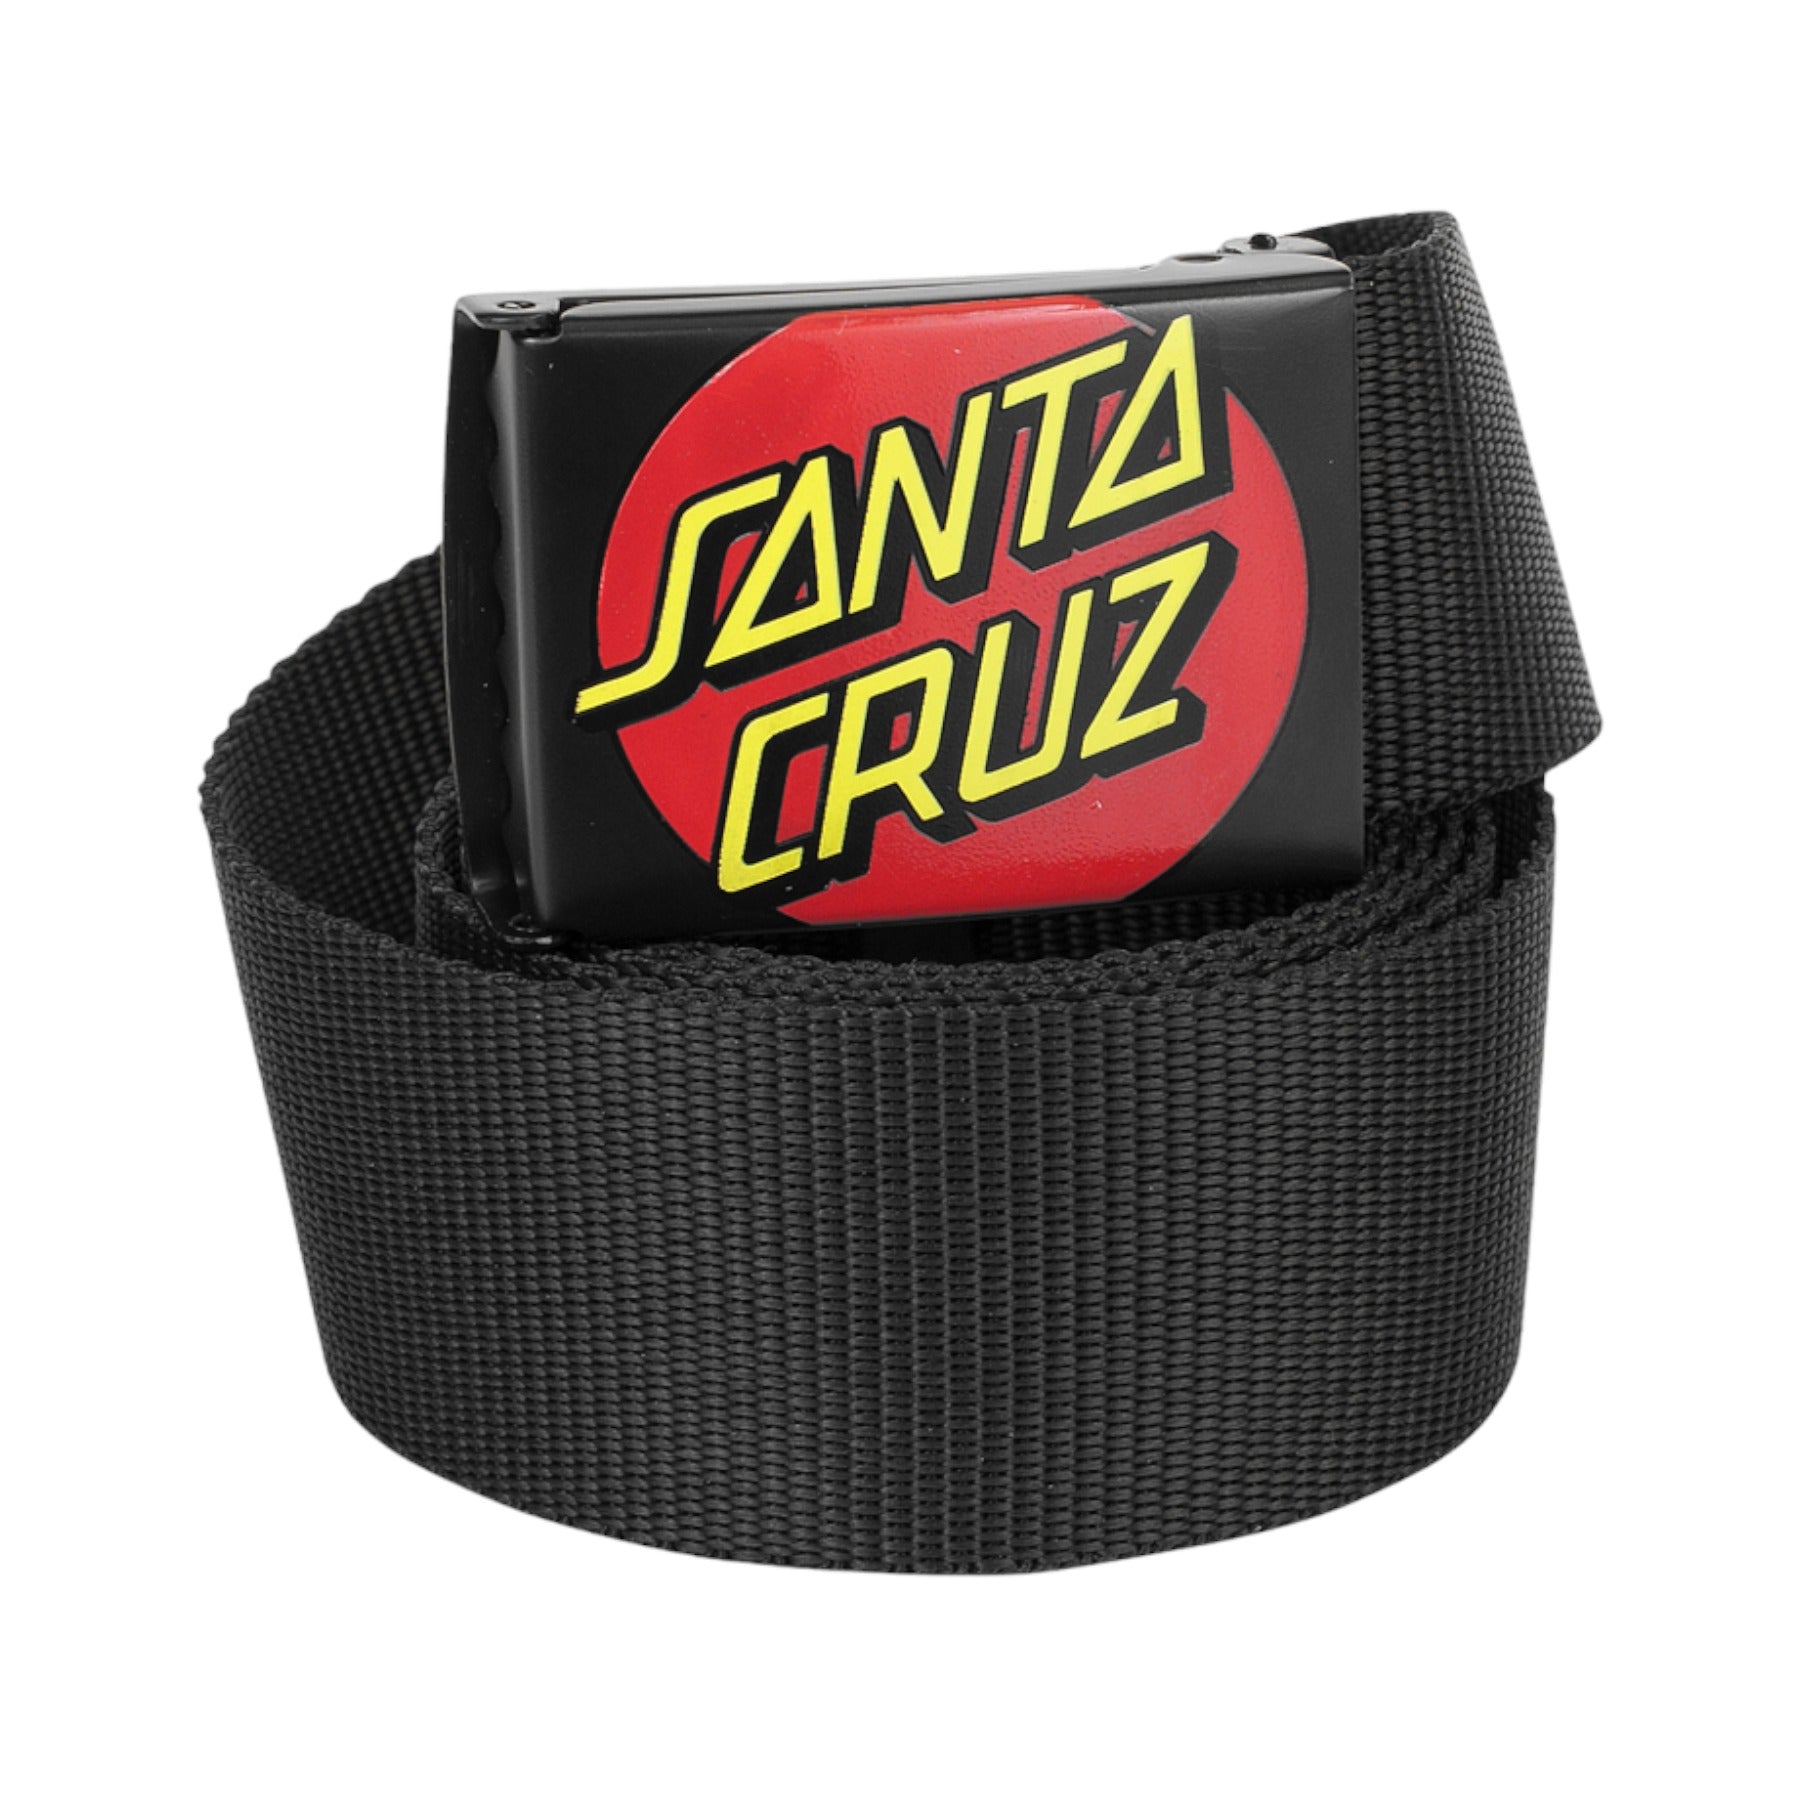 Santa Cruz Classic Dot Web Belt - Black